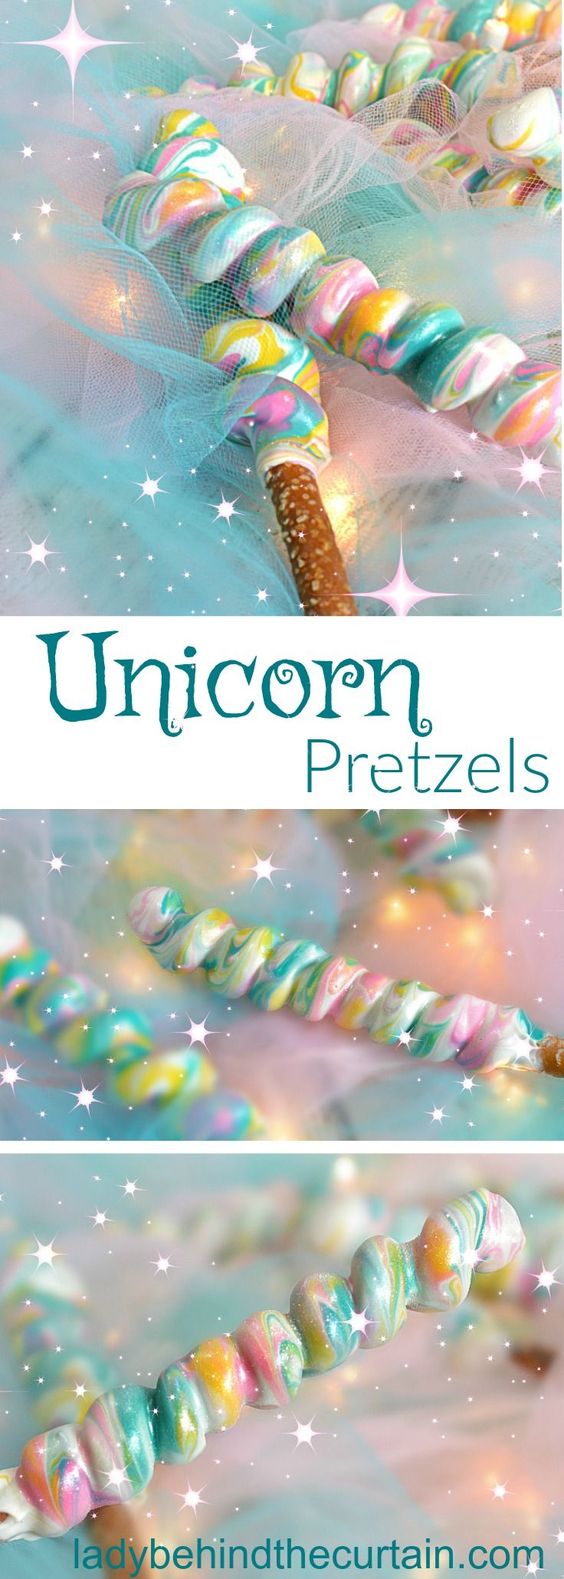 Unicorn desserts for a unicorn party: Unicorn Pretzels